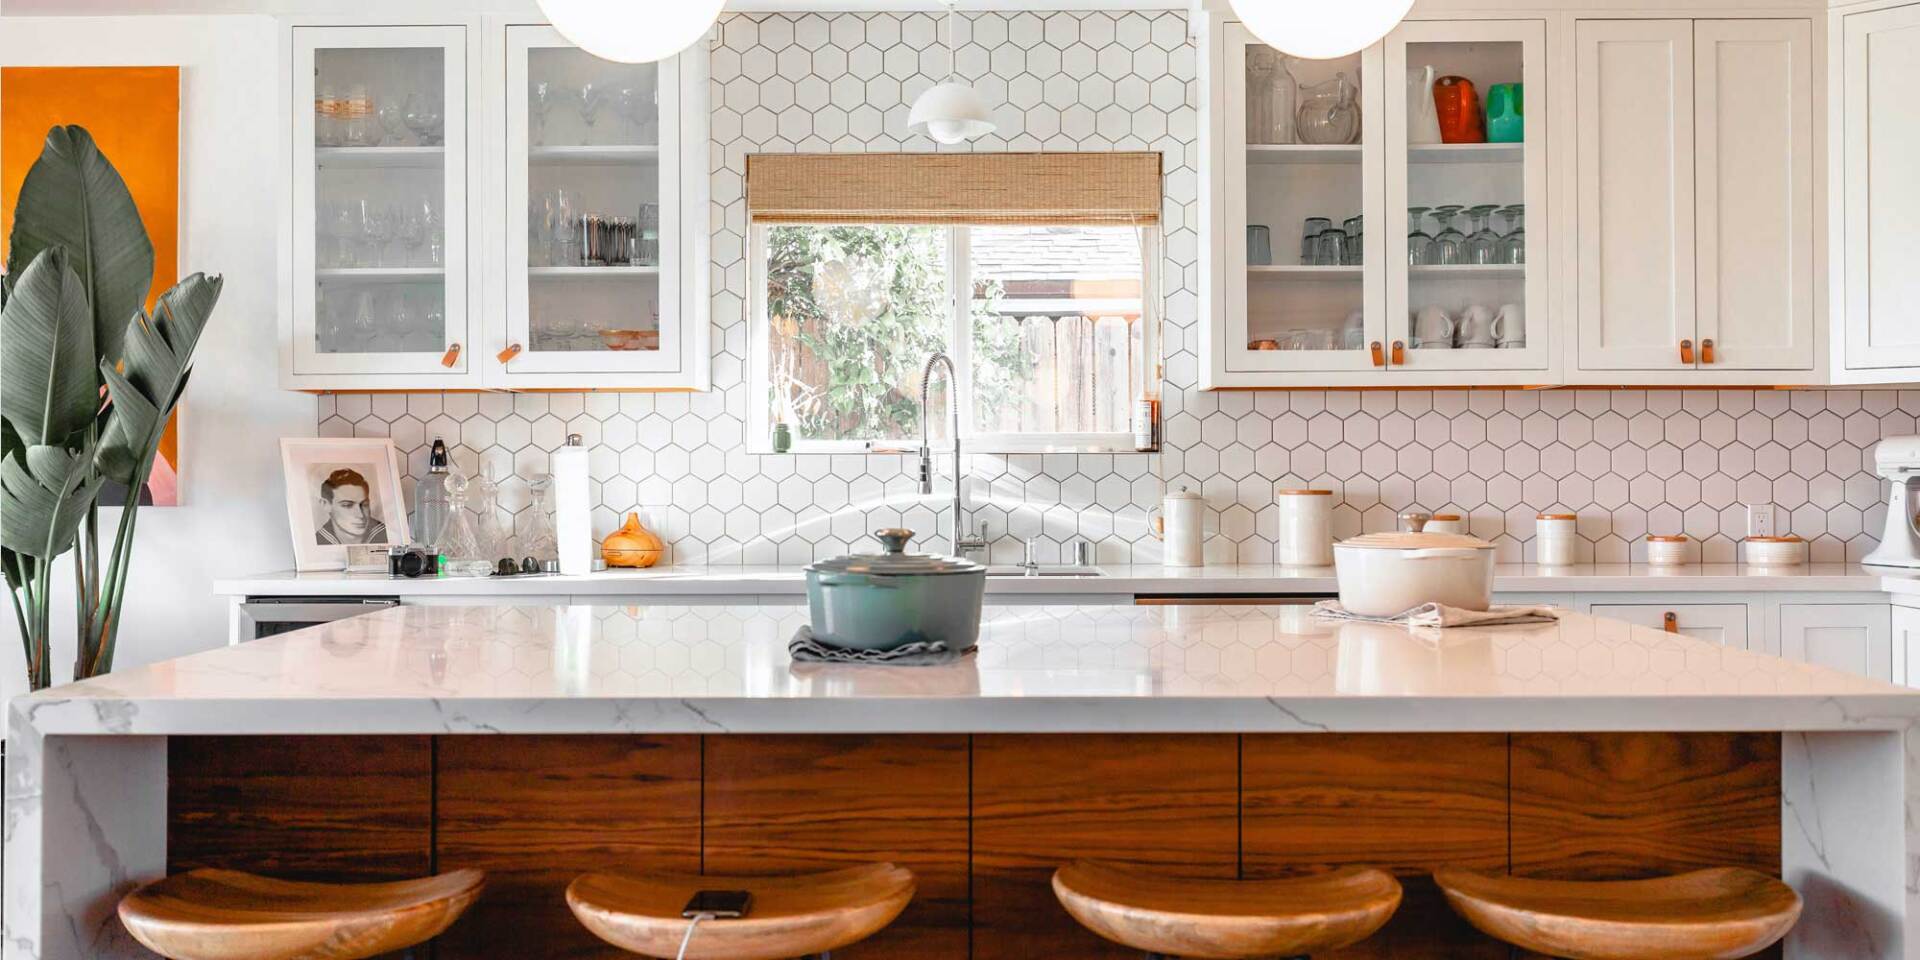 White and timber kitchen with hexigon tile backsplash